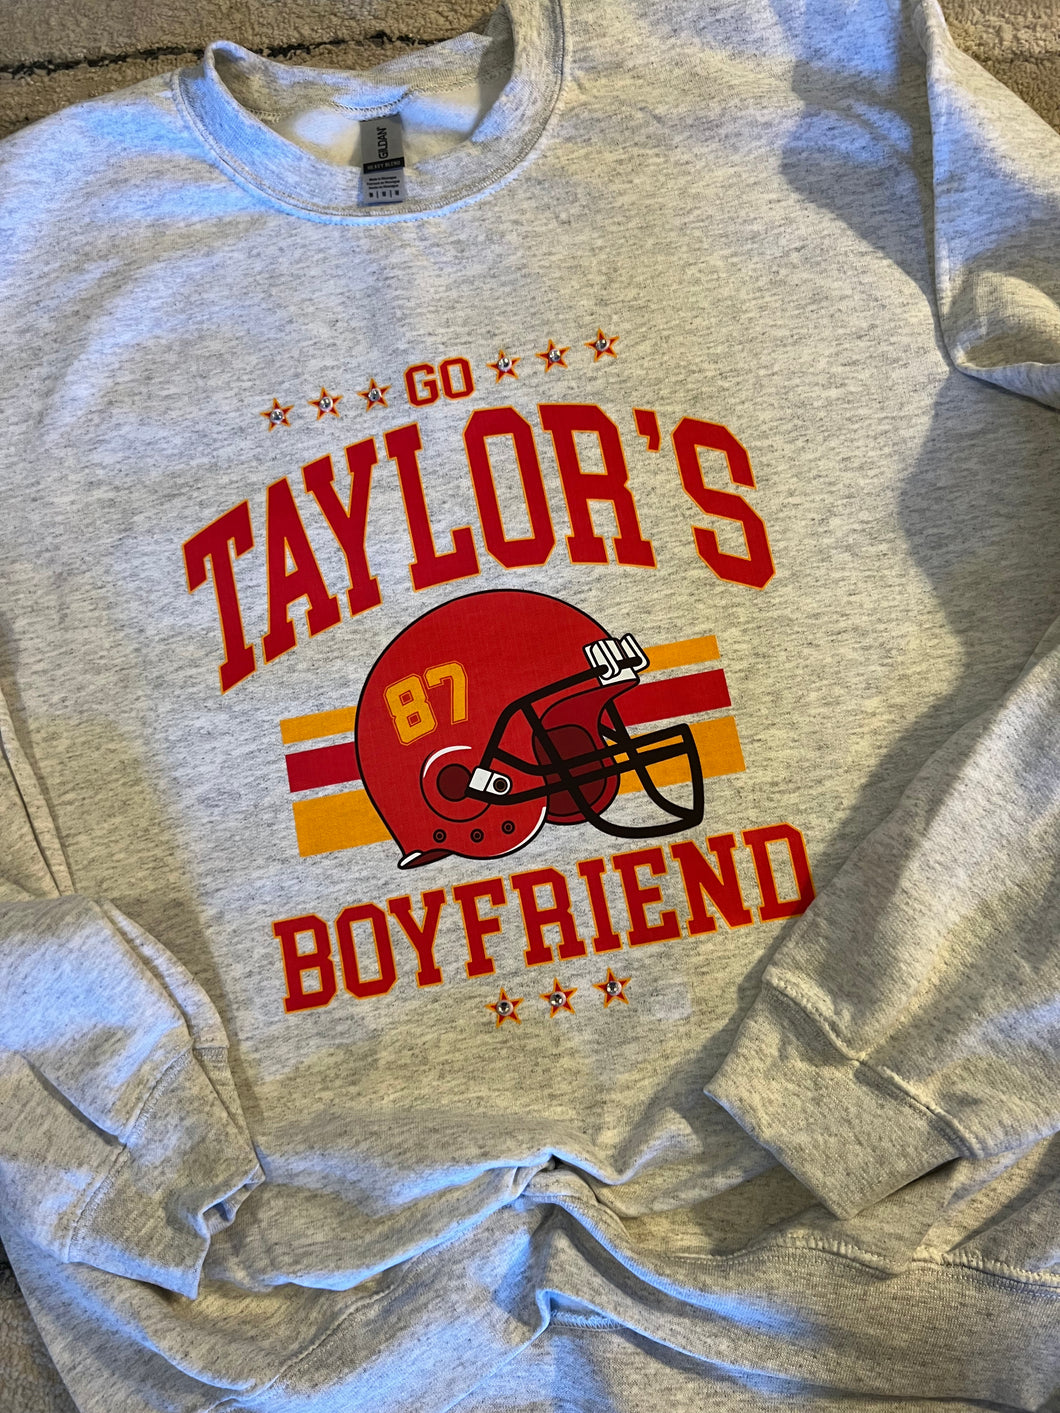 Go Taylor’s Boyfriend -Helmet